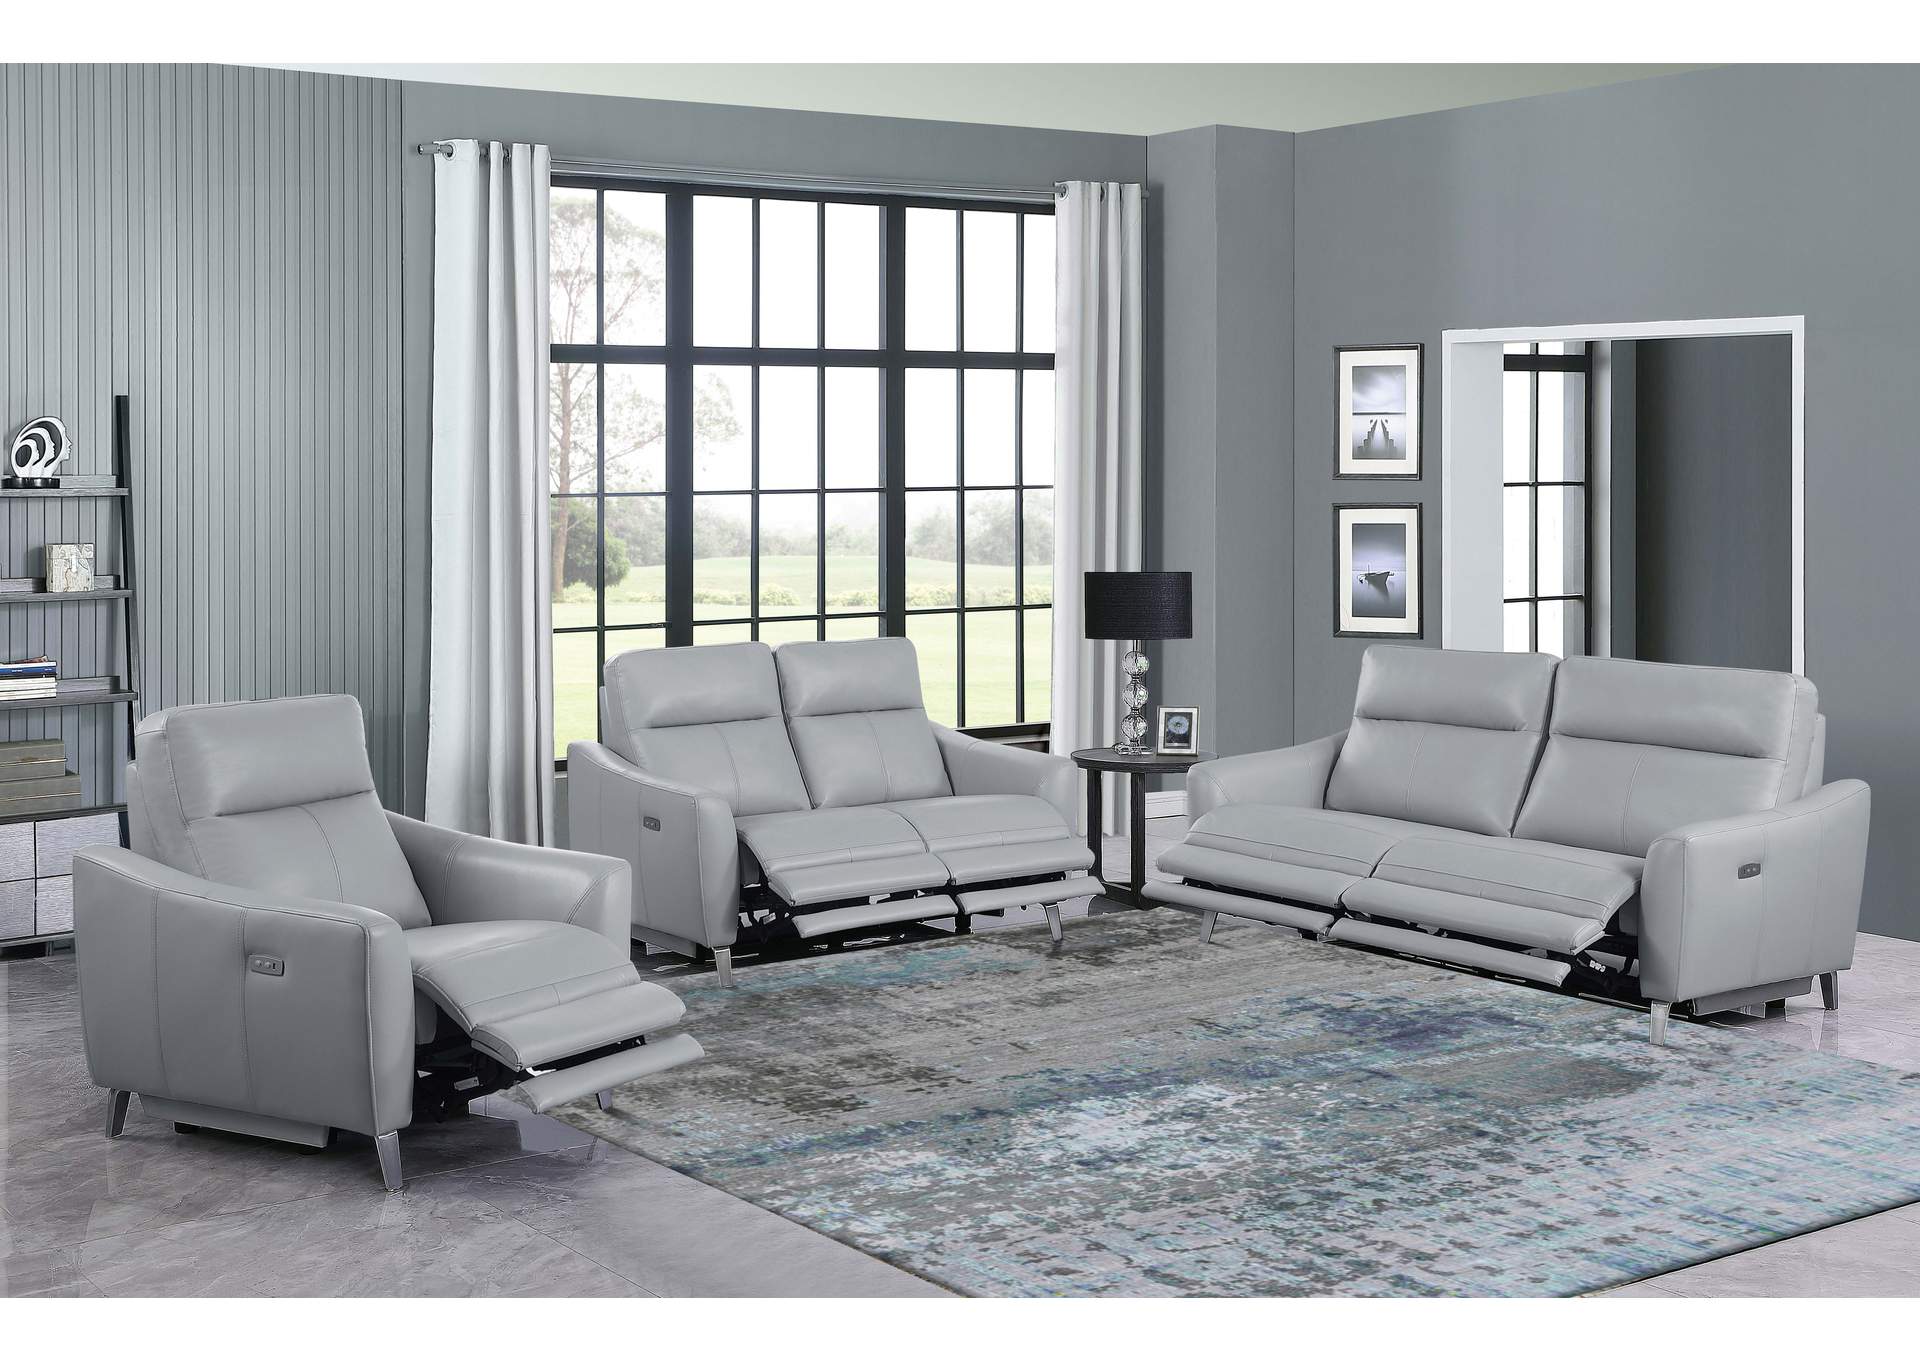 Derek Upholstered Power Sofa,Coaster Furniture